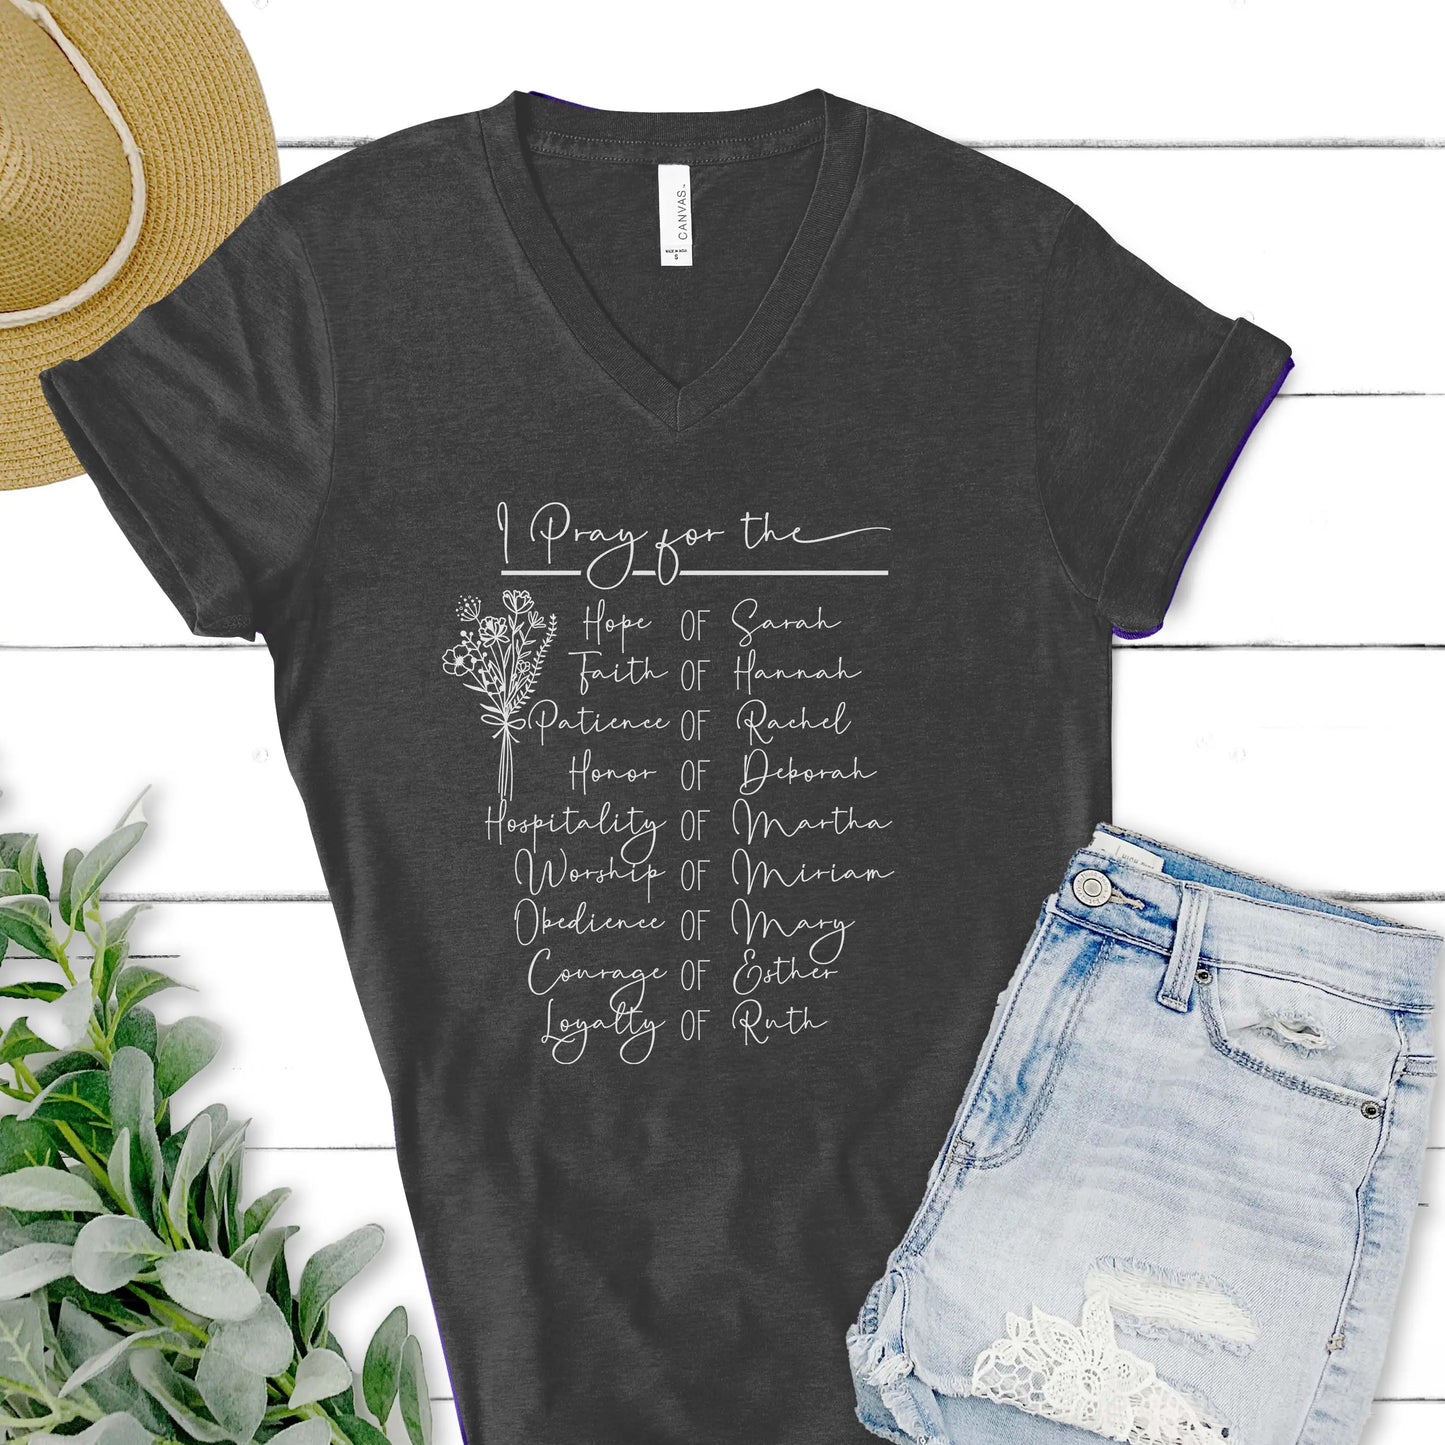 Women of the Bible V-neck Christian T-shirt - Amazing Faith Designs